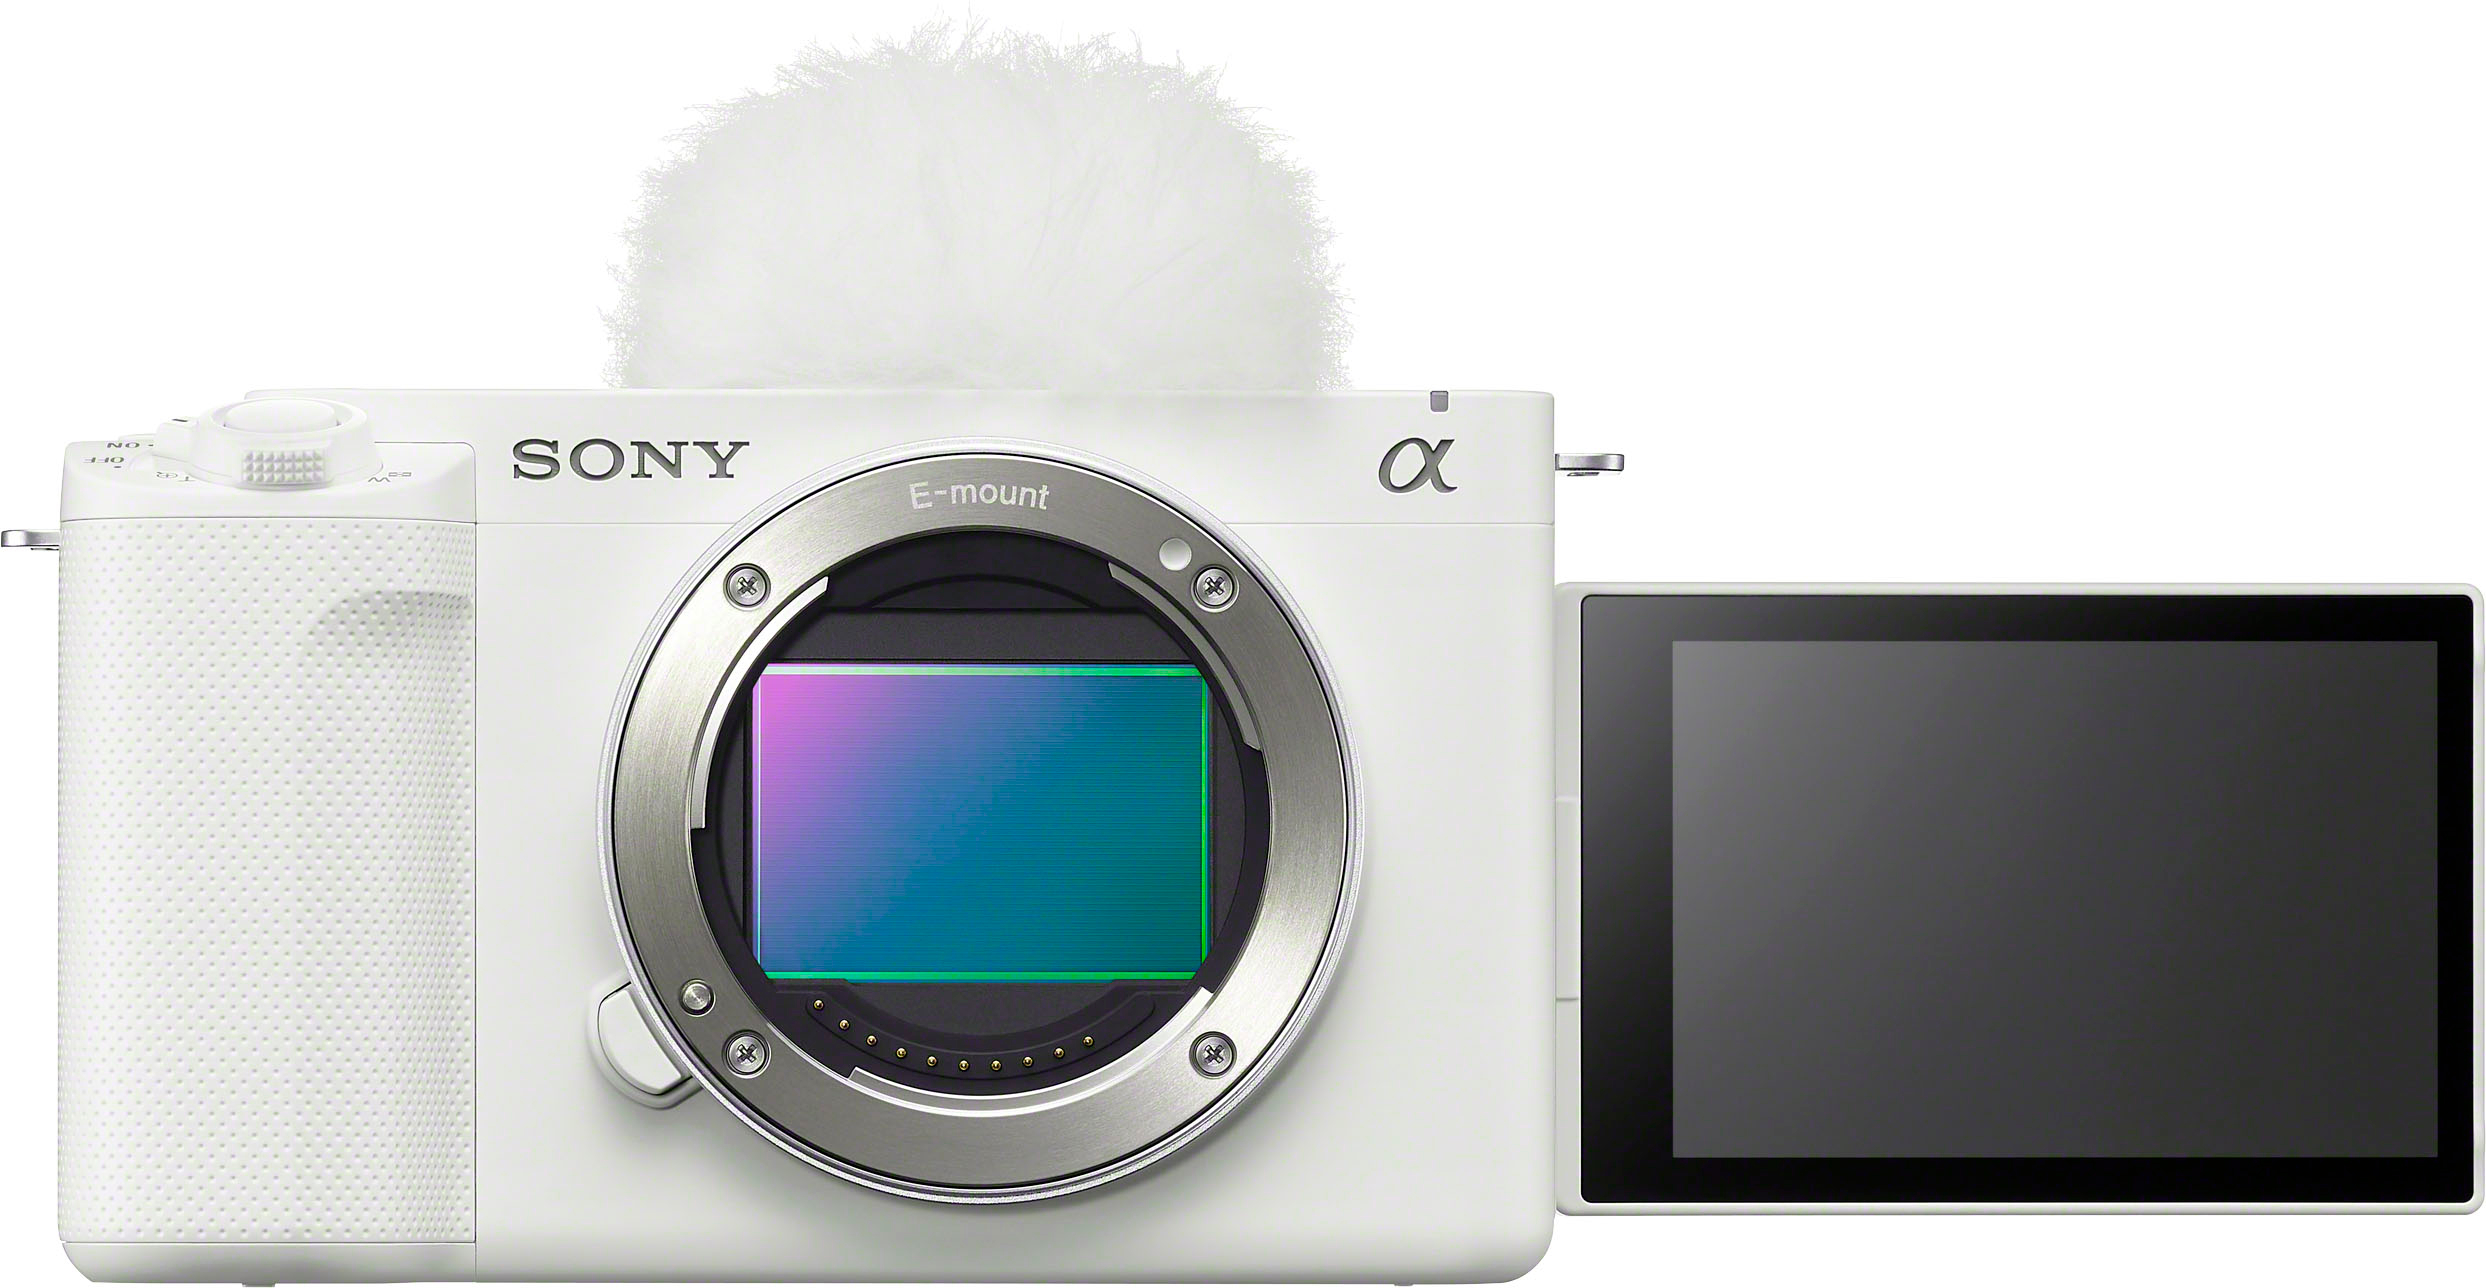 Sony ZV-E1 Mirrorless Fullframe Digital Camera Body Only (ประกันศูนย์ 1 ปี)  ราคา